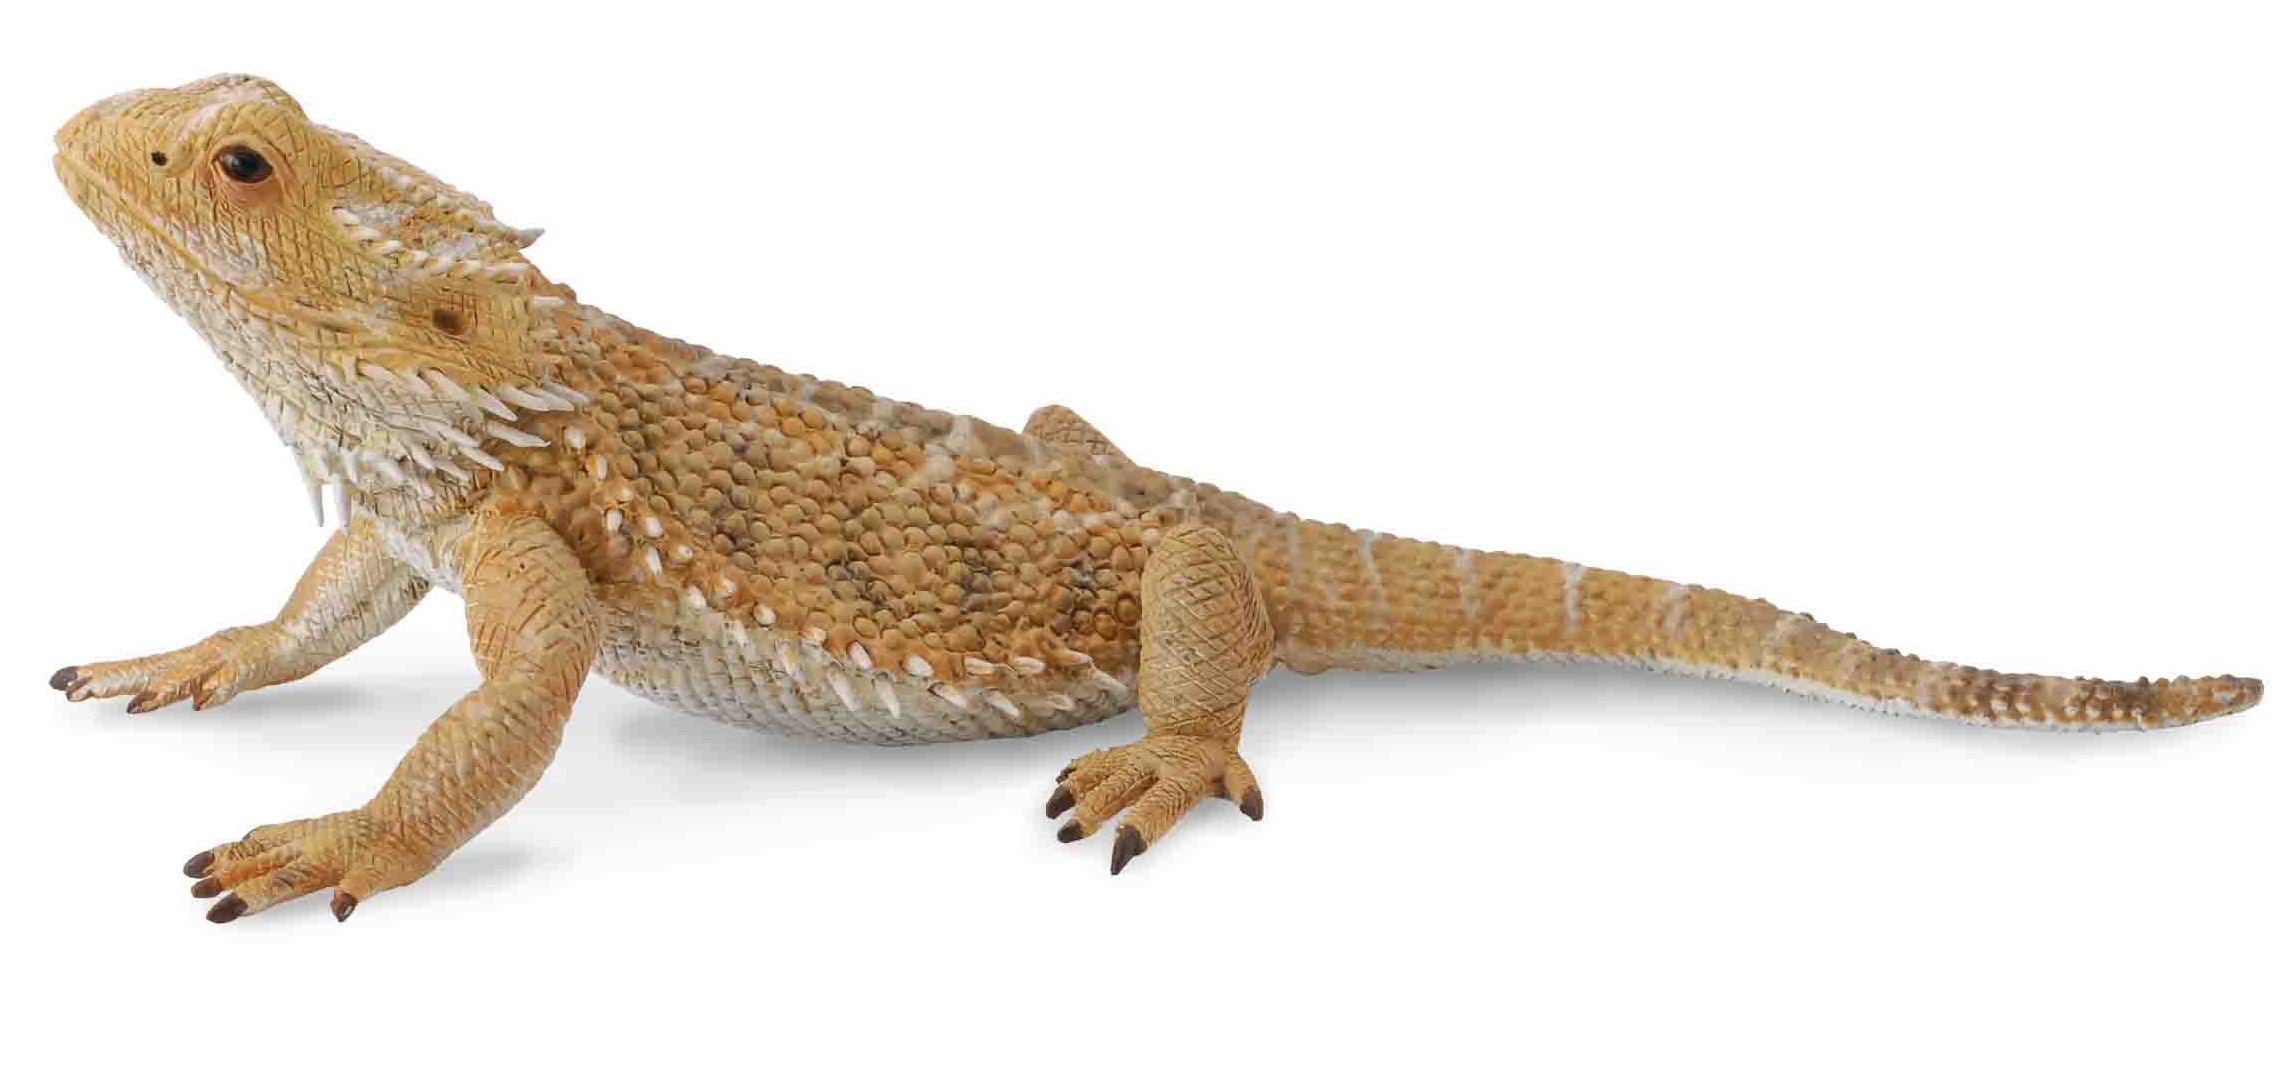 Beardead Dragon Lizard 88567b - Йошкар-Ола 